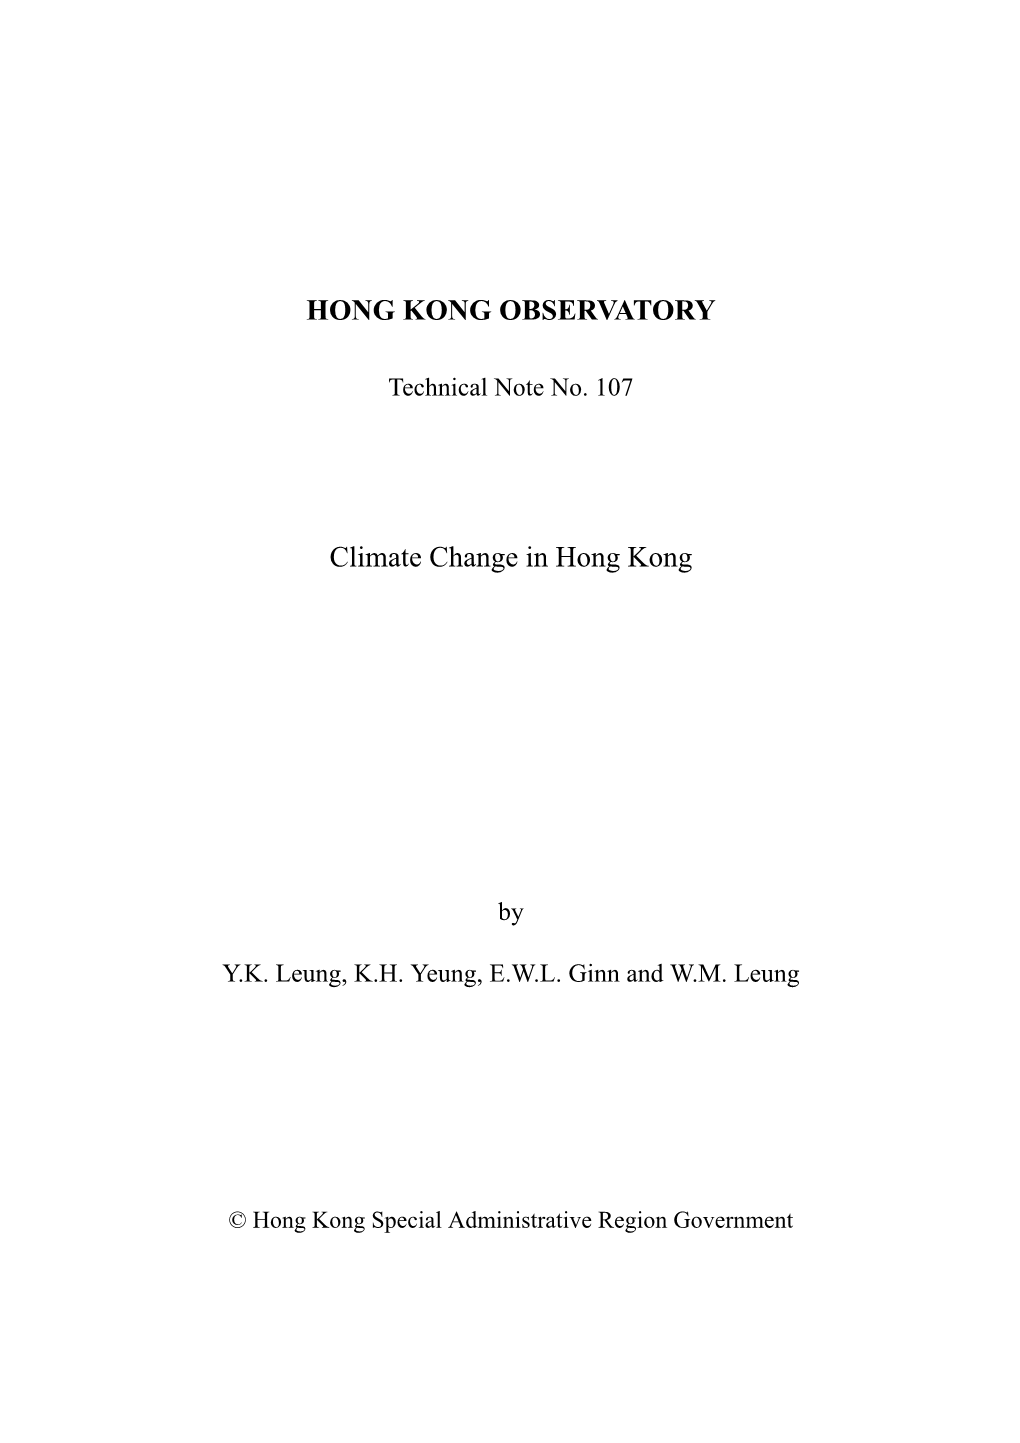 HONG KONG OBSERVATORY Climate Change in Hong Kong